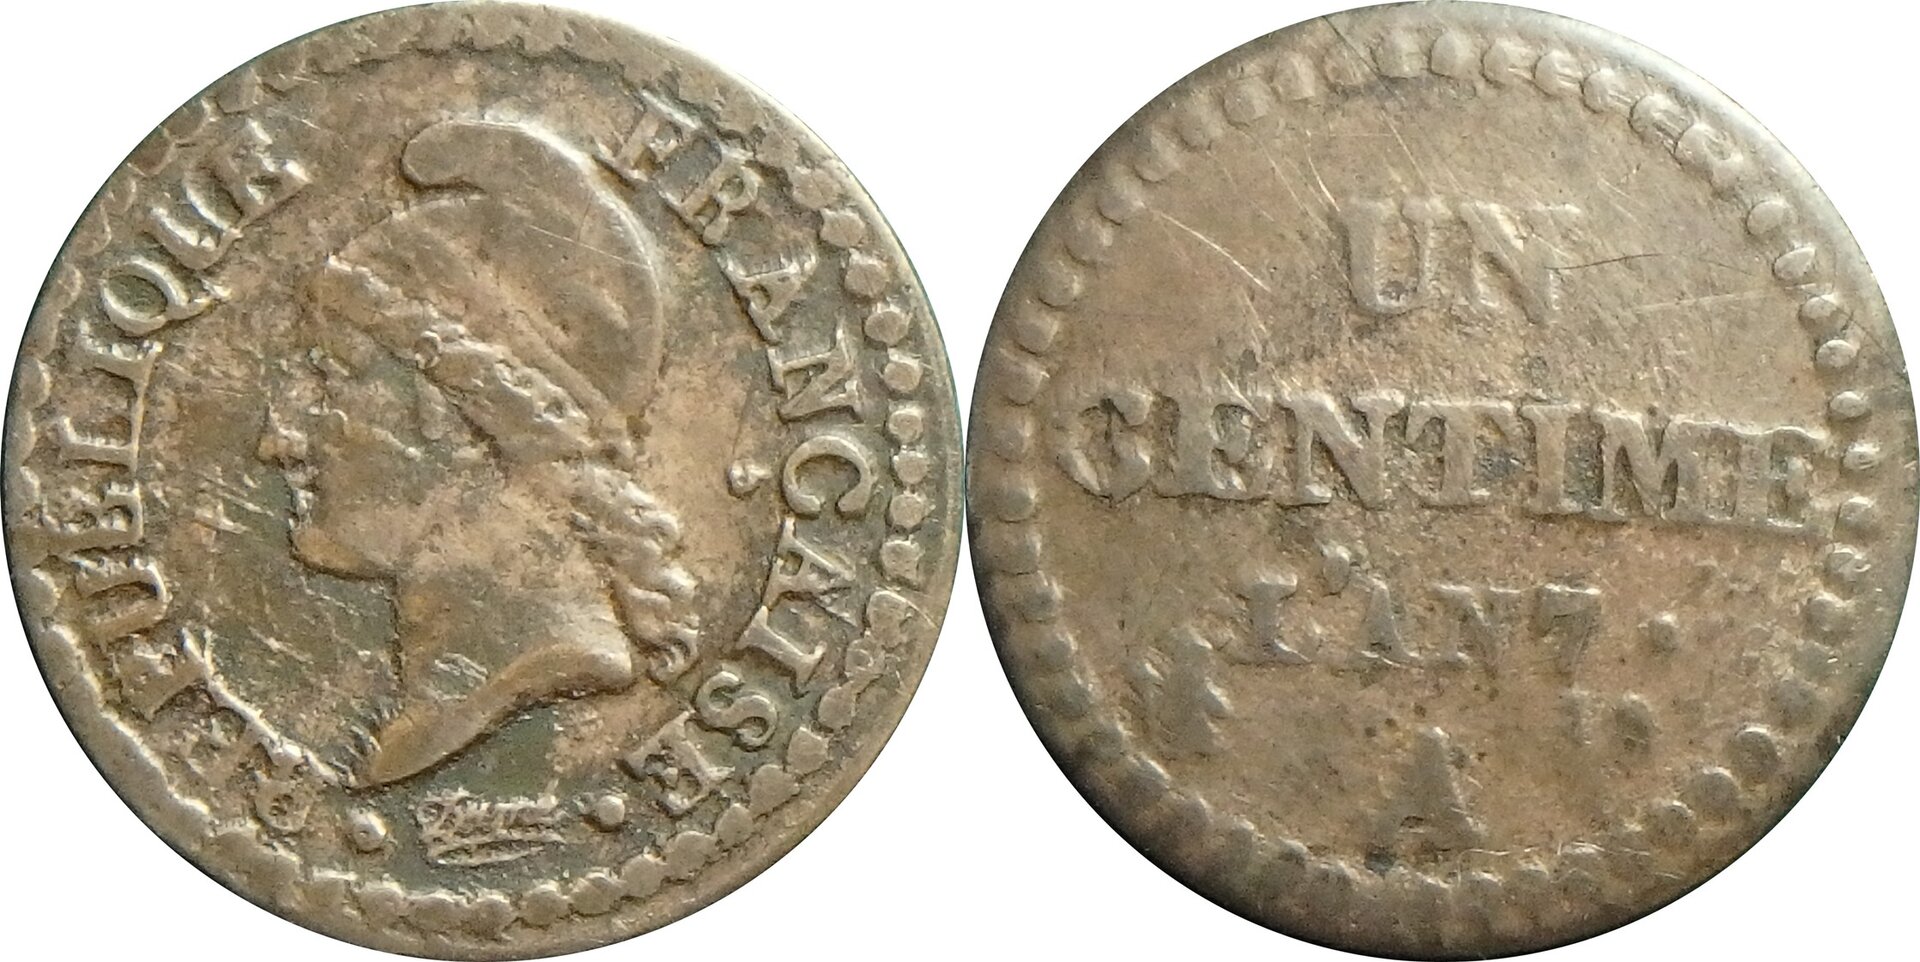 1798 A FR 1 c.jpg